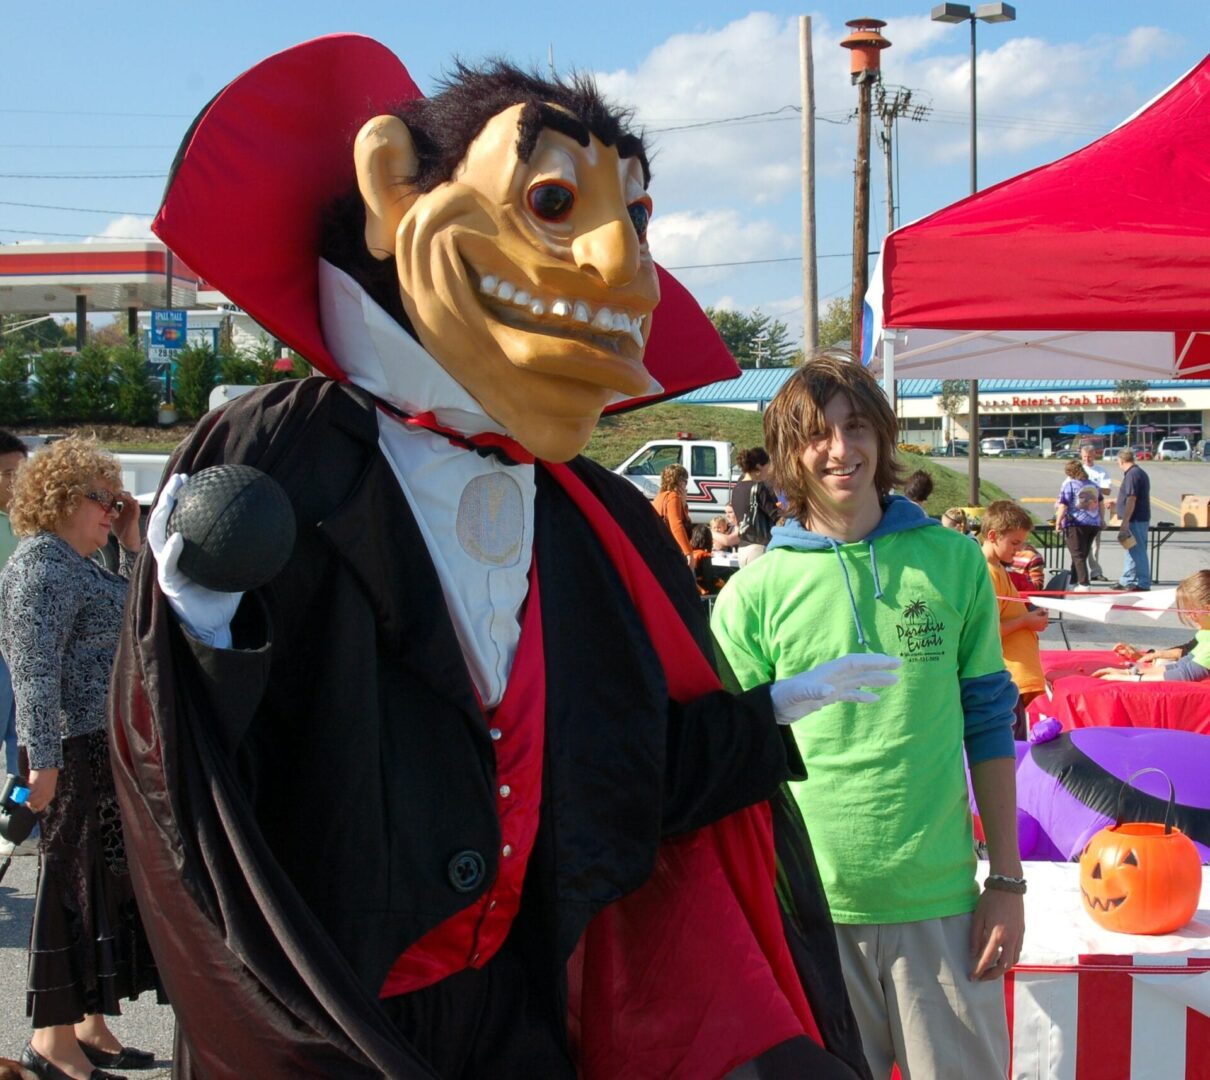 the count Dracula mascot